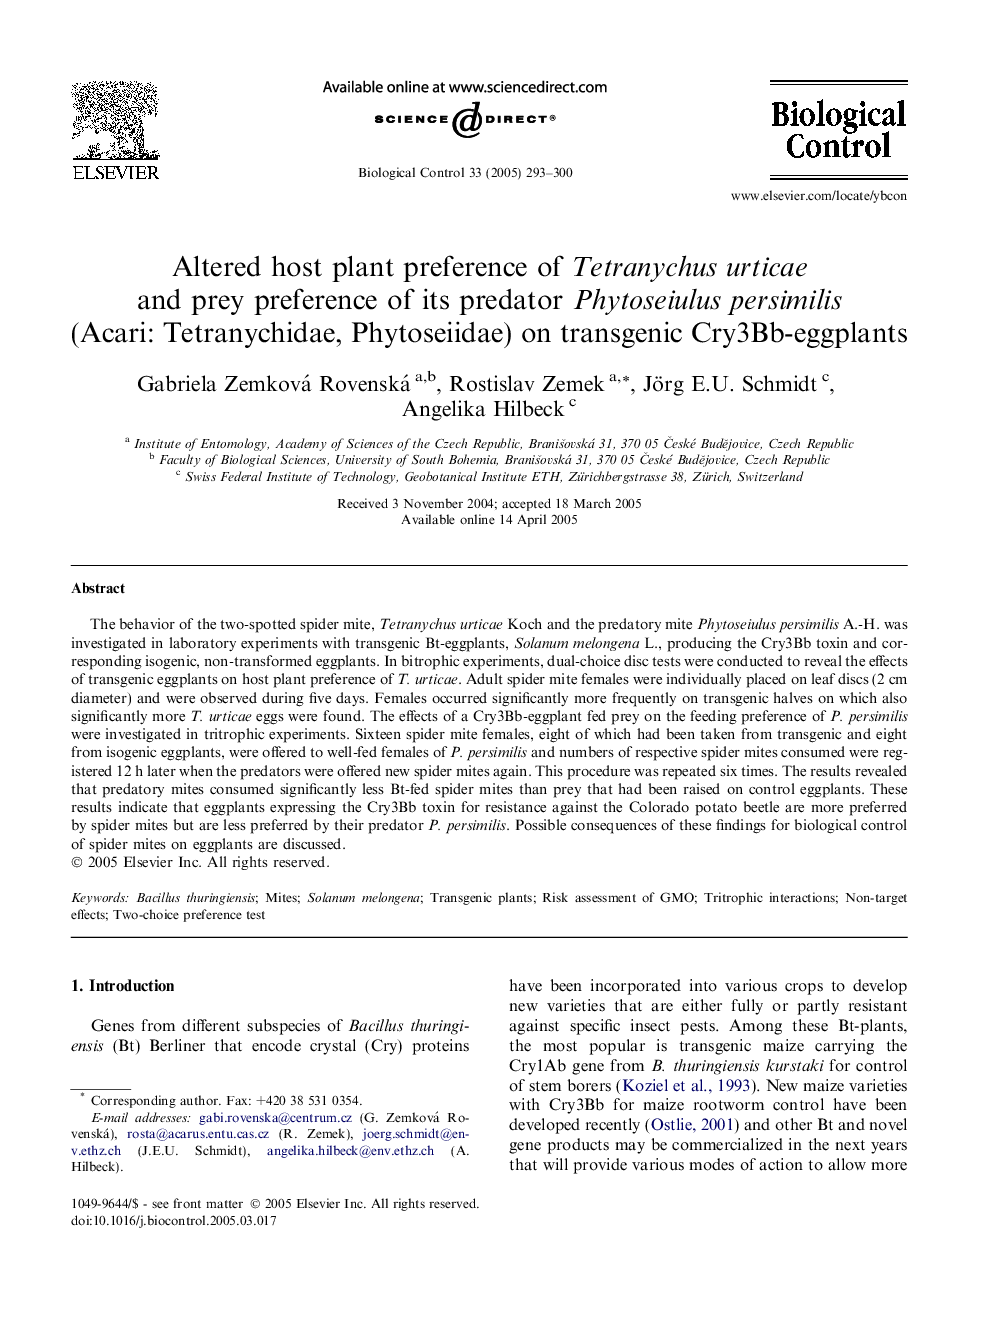 Altered host plant preference of Tetranychus urticae and prey preference of its predator Phytoseiulus persimilis (Acari: Tetranychidae, Phytoseiidae) on transgenic Cry3Bb-eggplants